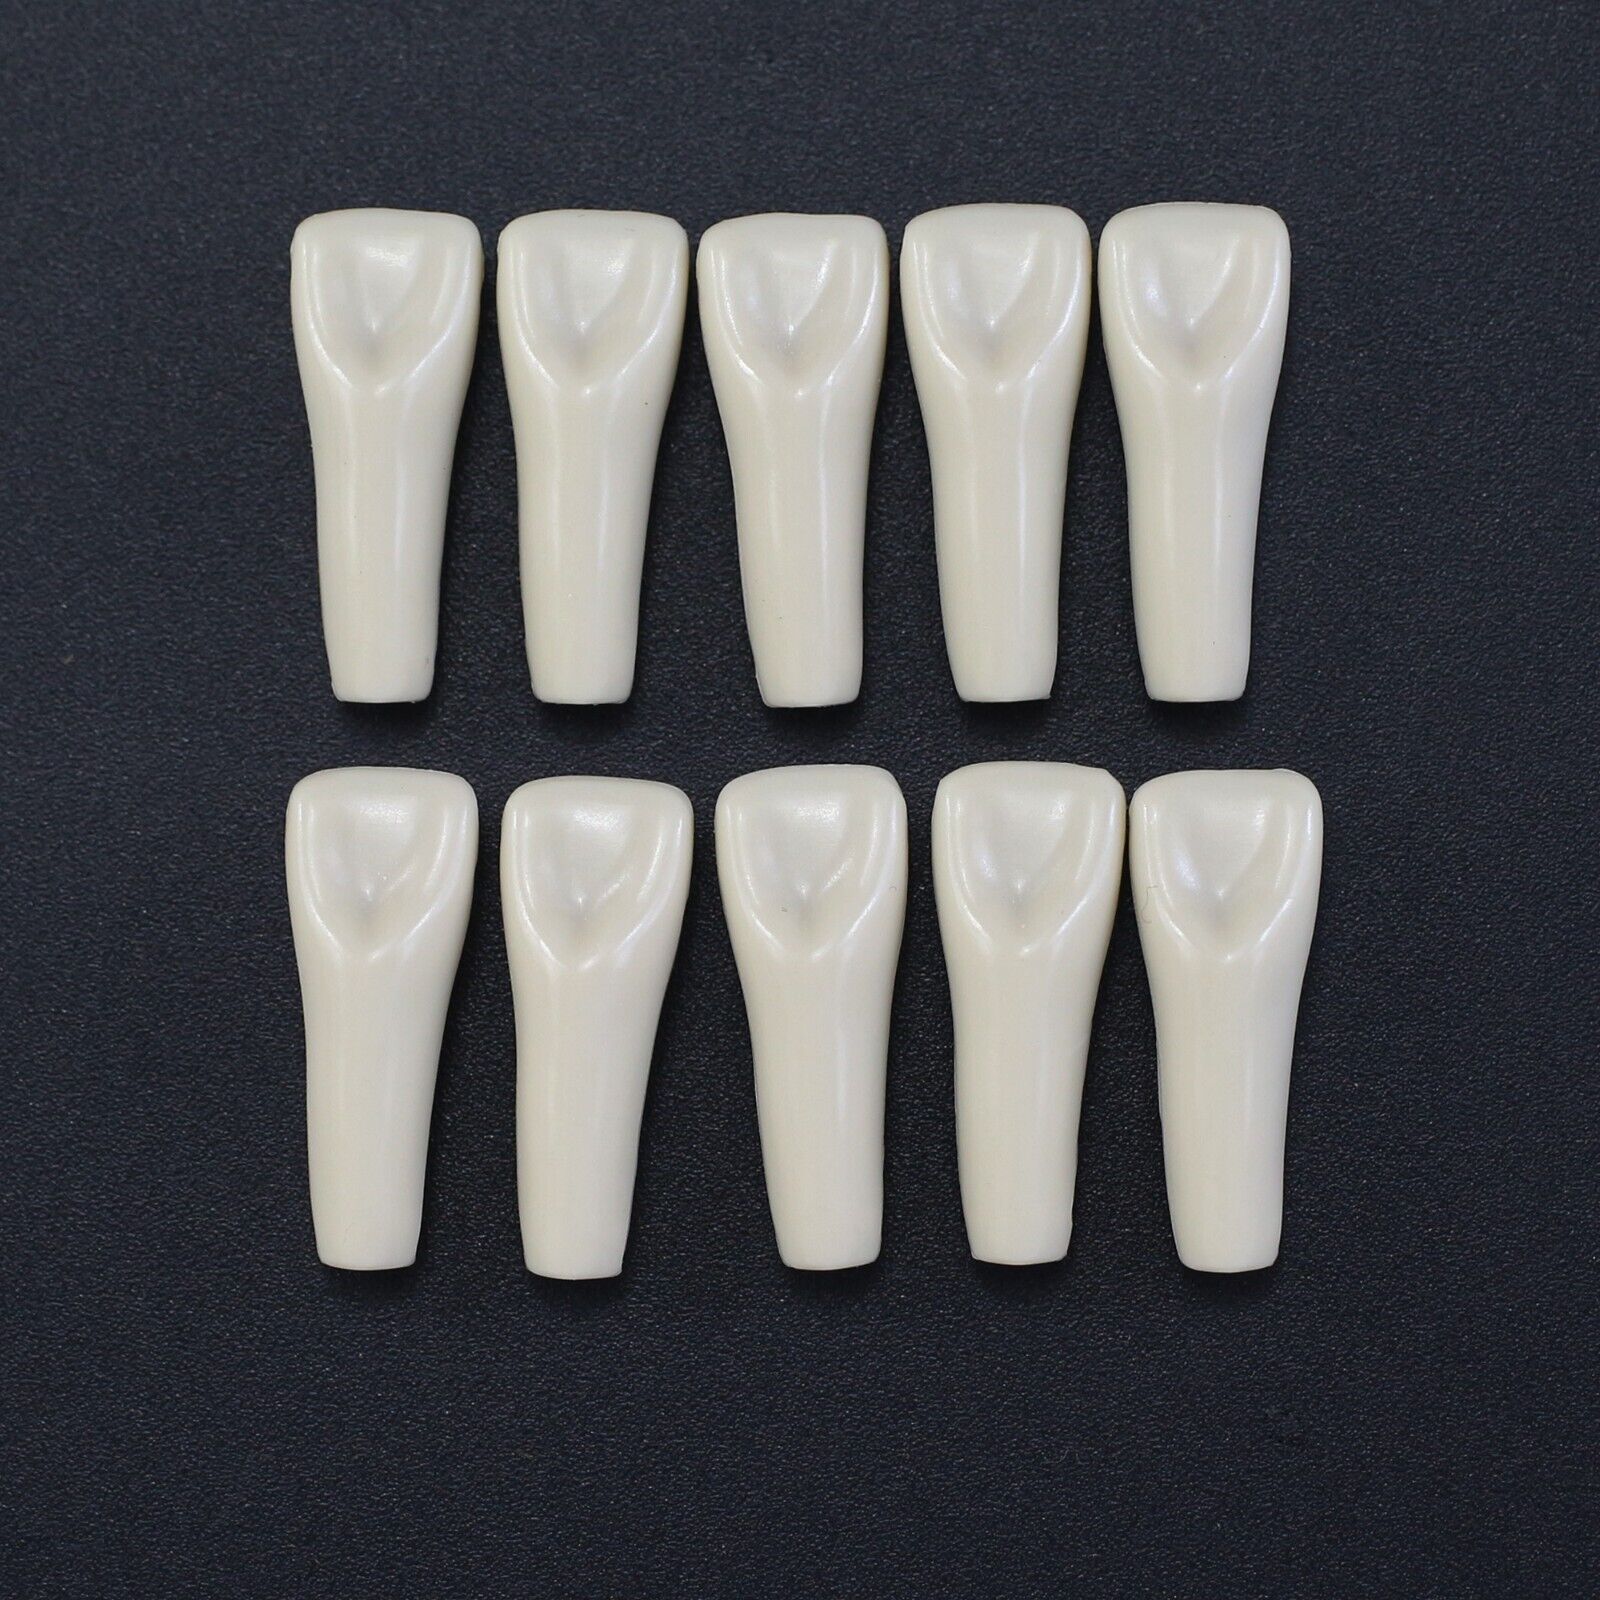 Columbia 860 10pcs/lot Dental Individual Typodont Teeth Replacement